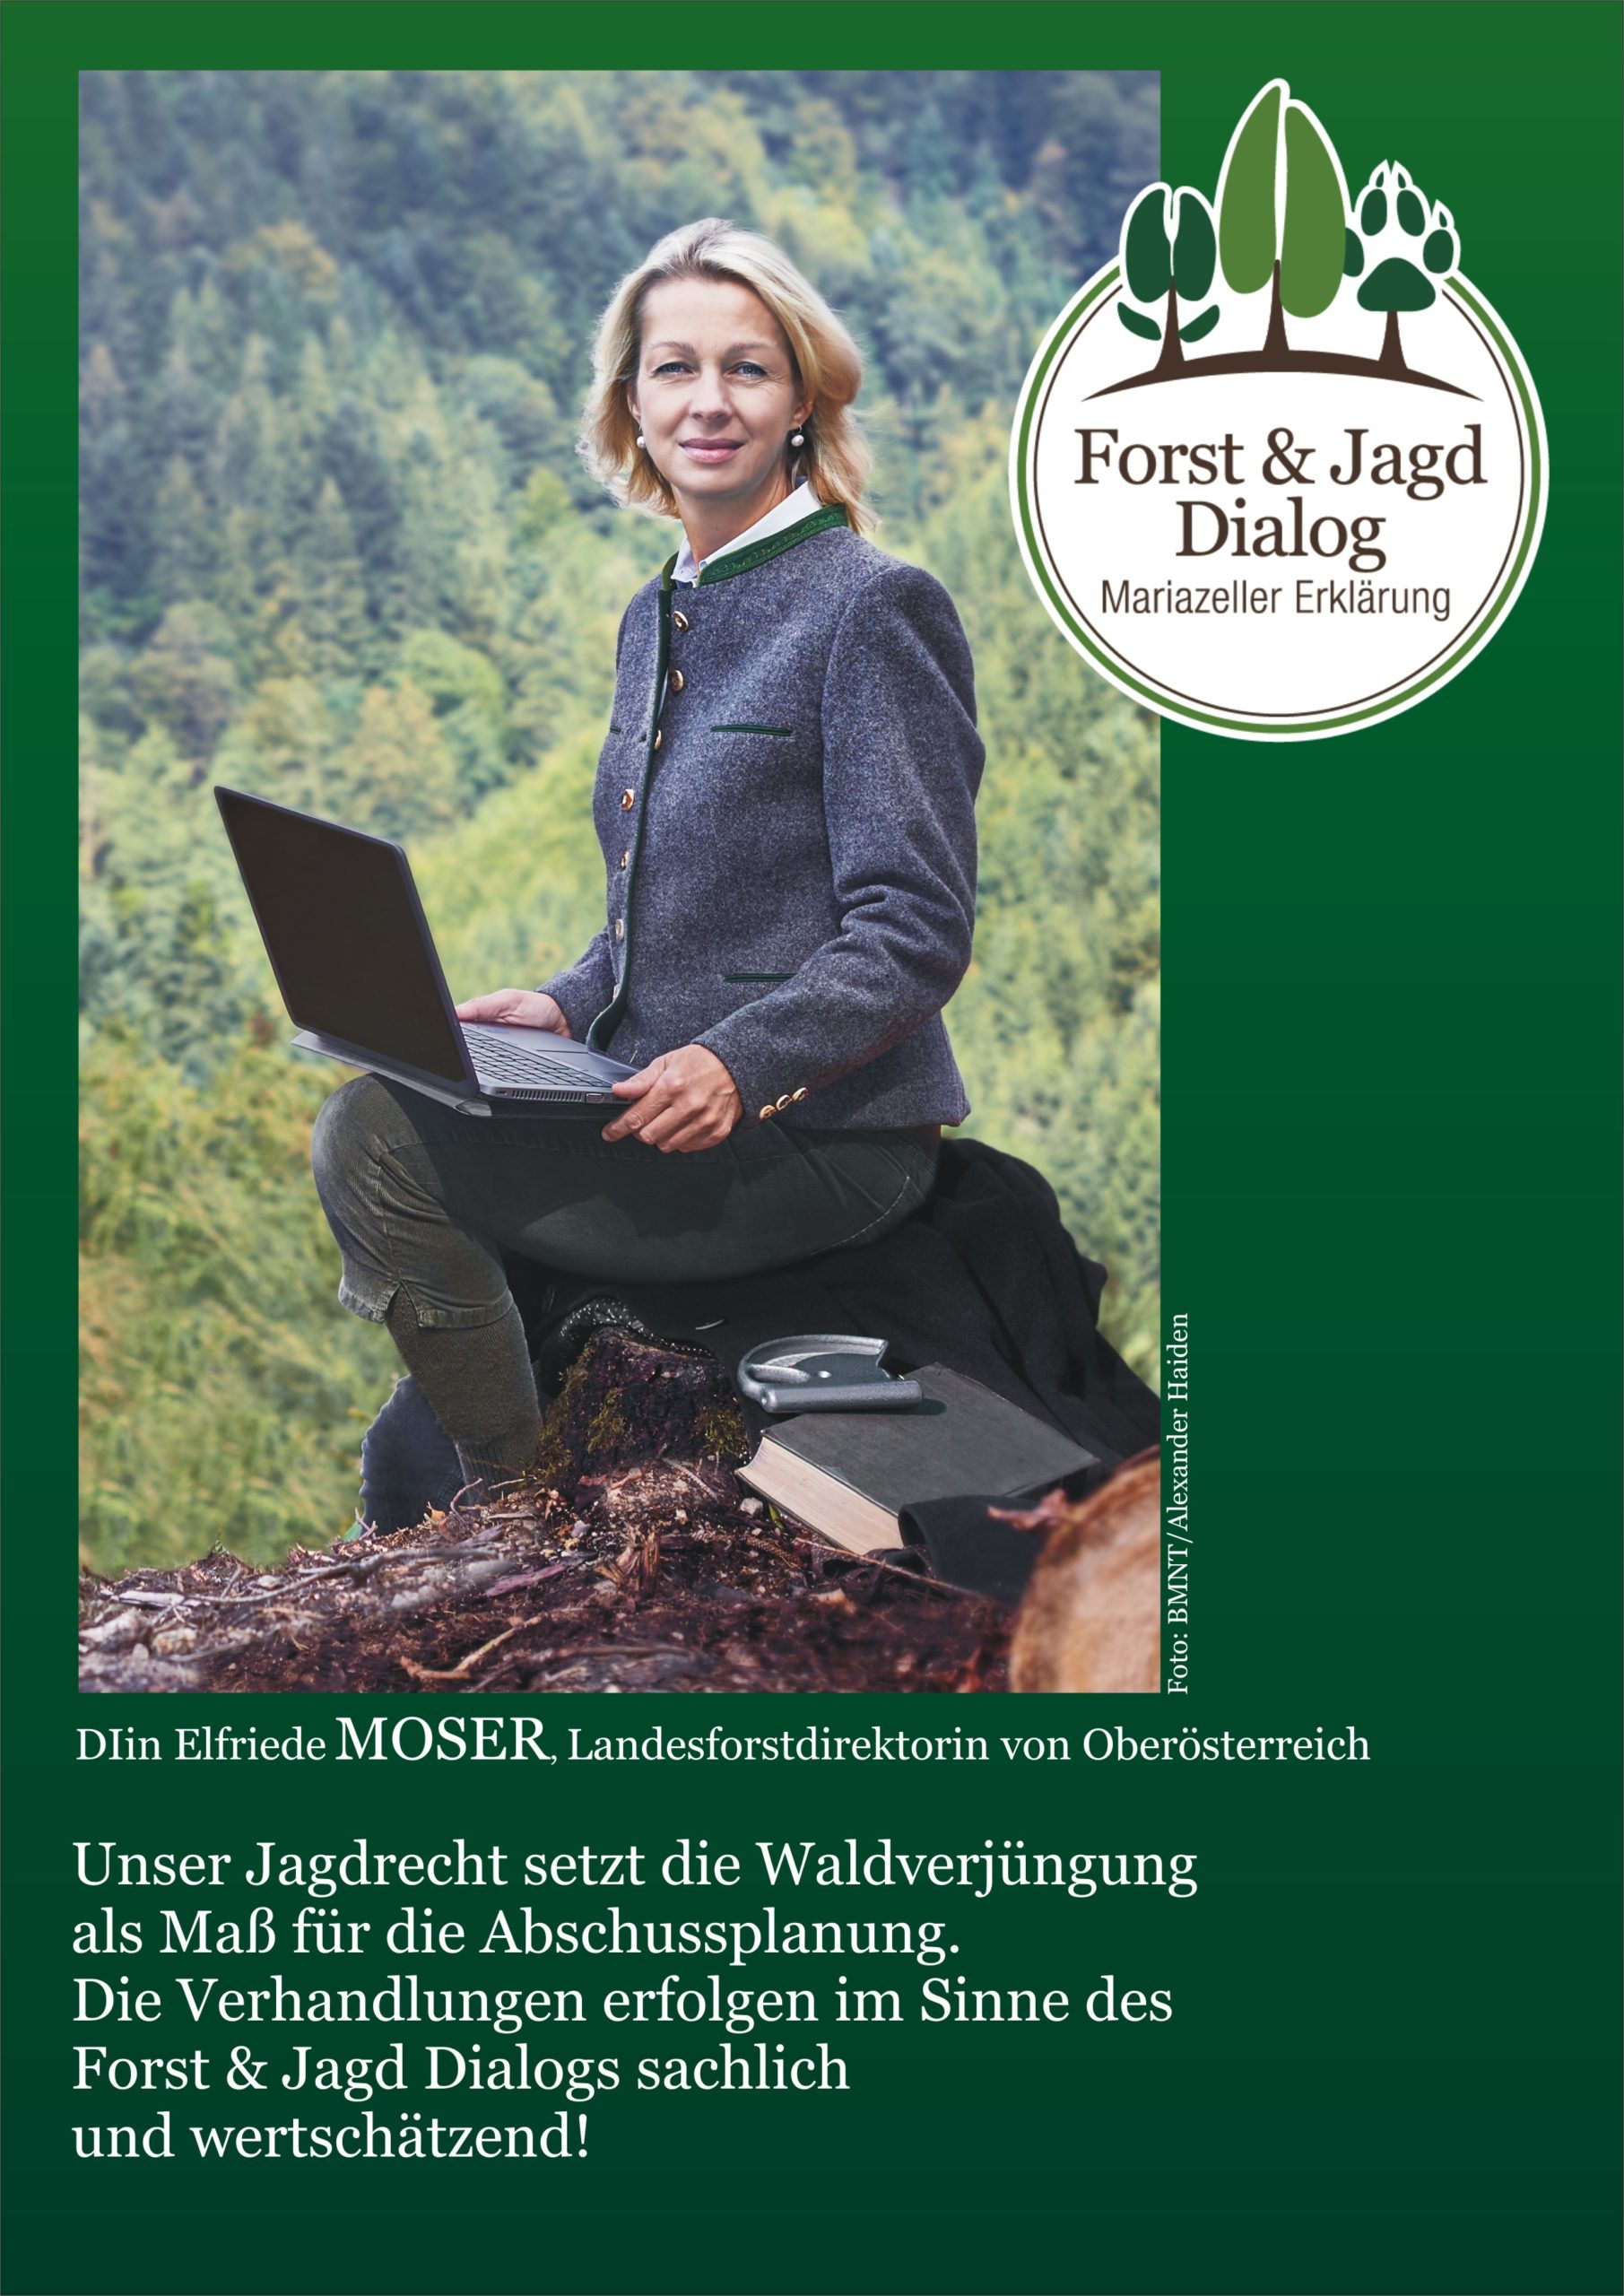 Partner & Prominente Stimmen, Forst & Jagd Dialog Österreich